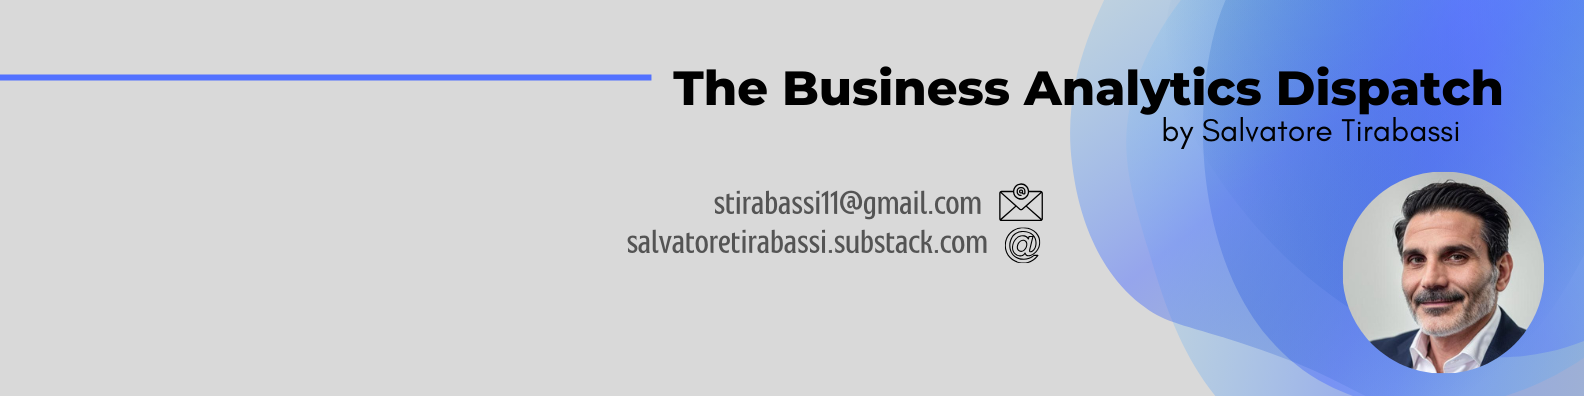 The Business Analytics Dispatch Banner